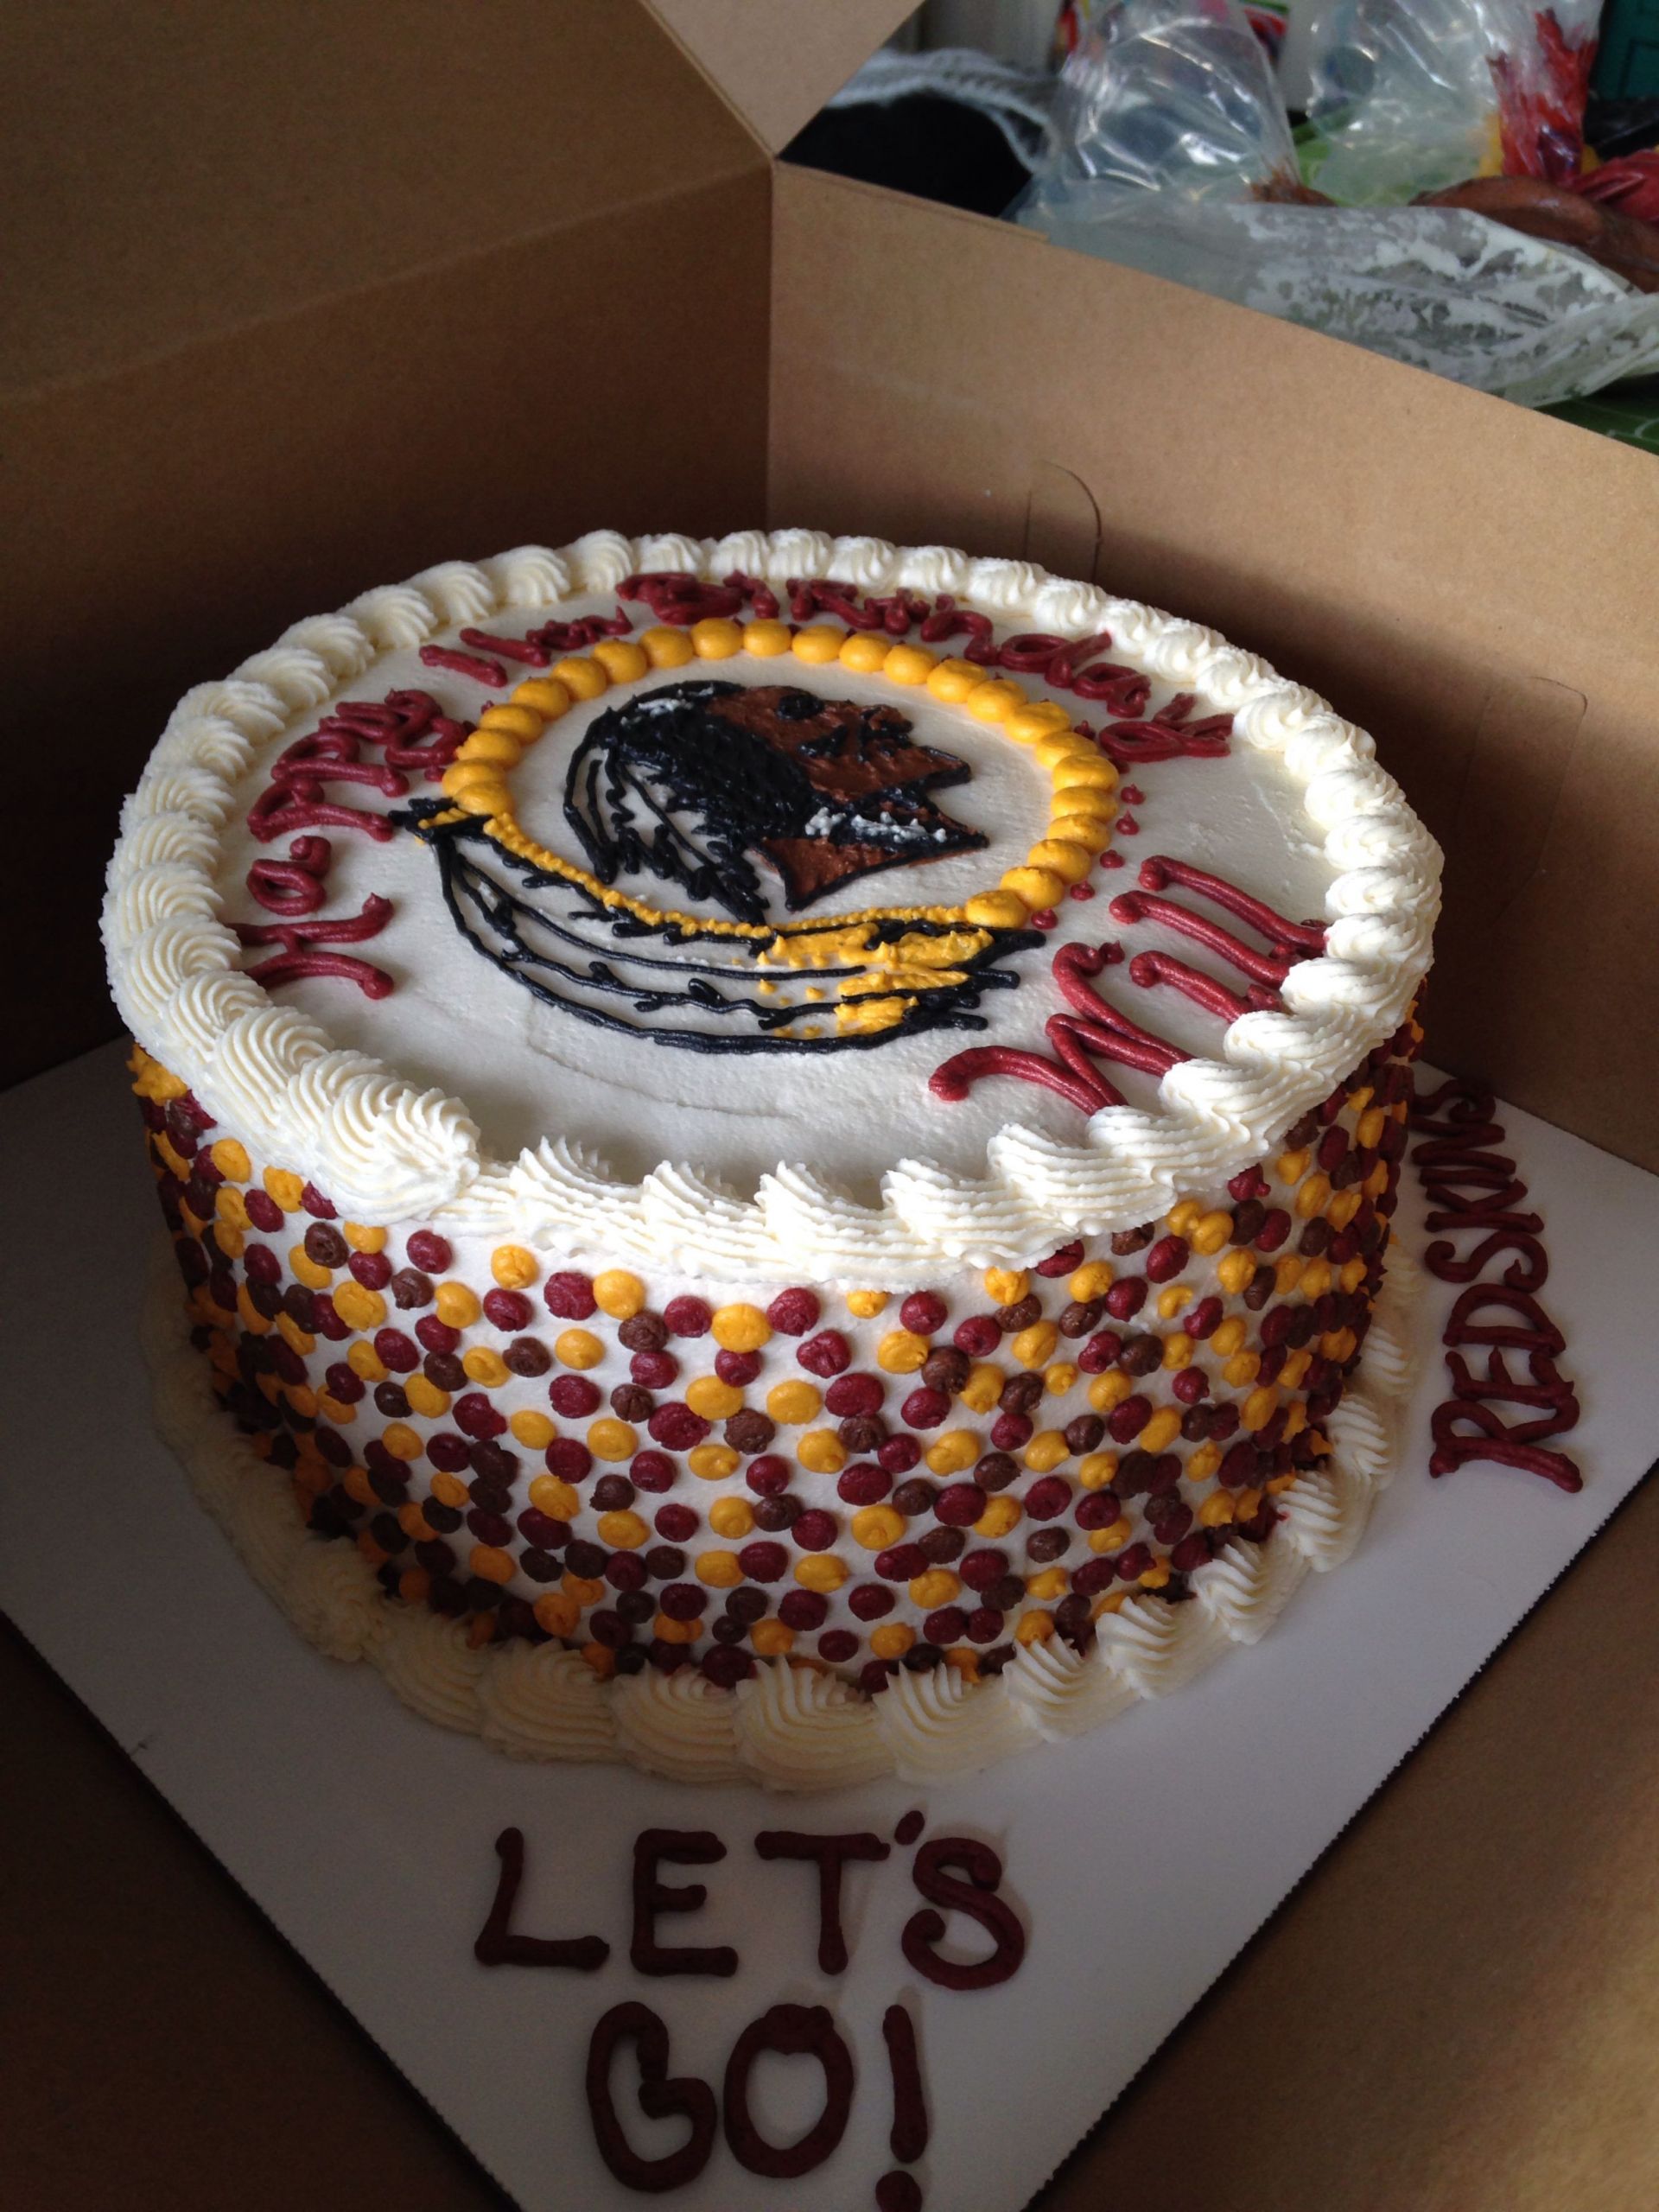 Redskins Birthday Cake
 Redskins Cake in 2019